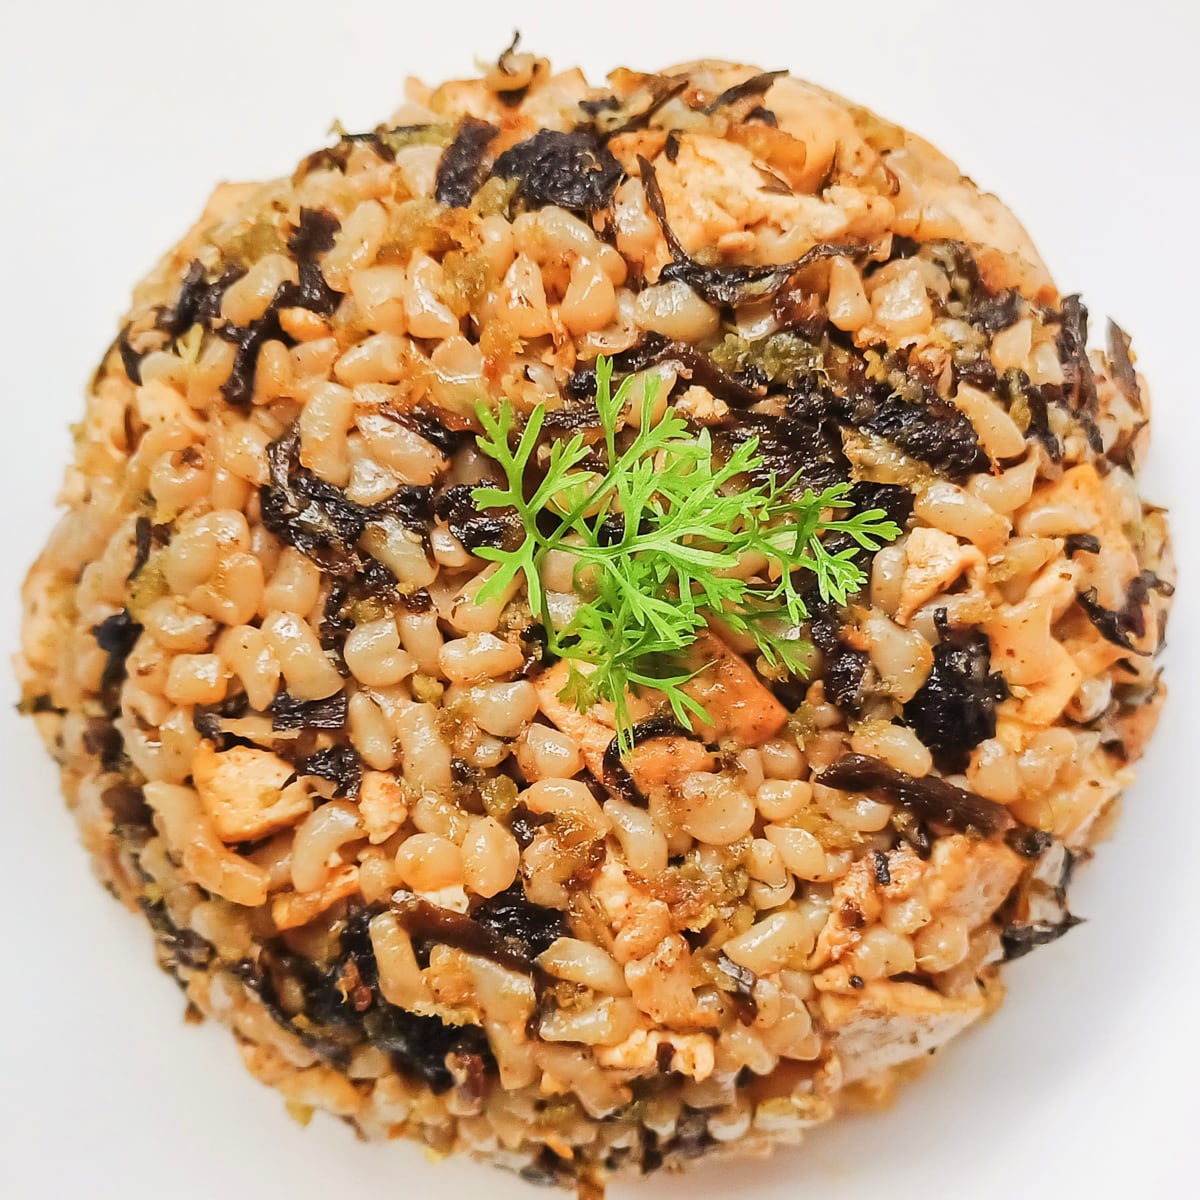 Olive Rice ❤︎ Healthy Keto